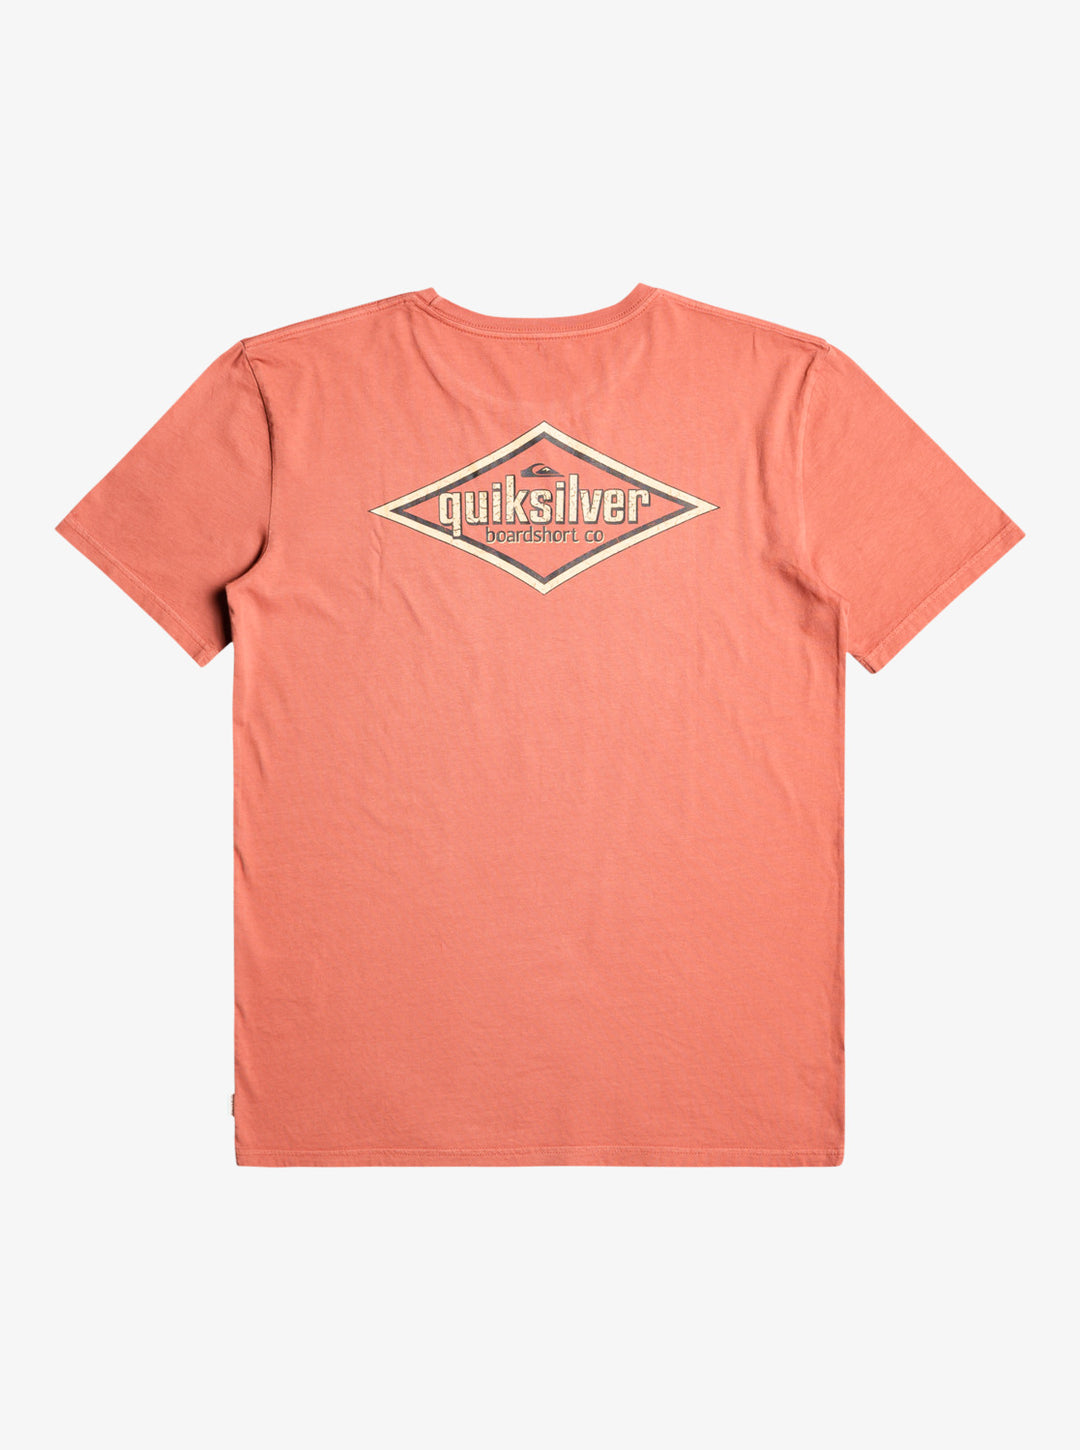 Quiksilver Quik Words T-Shirt - Marsala - Sun Diego Boardshop